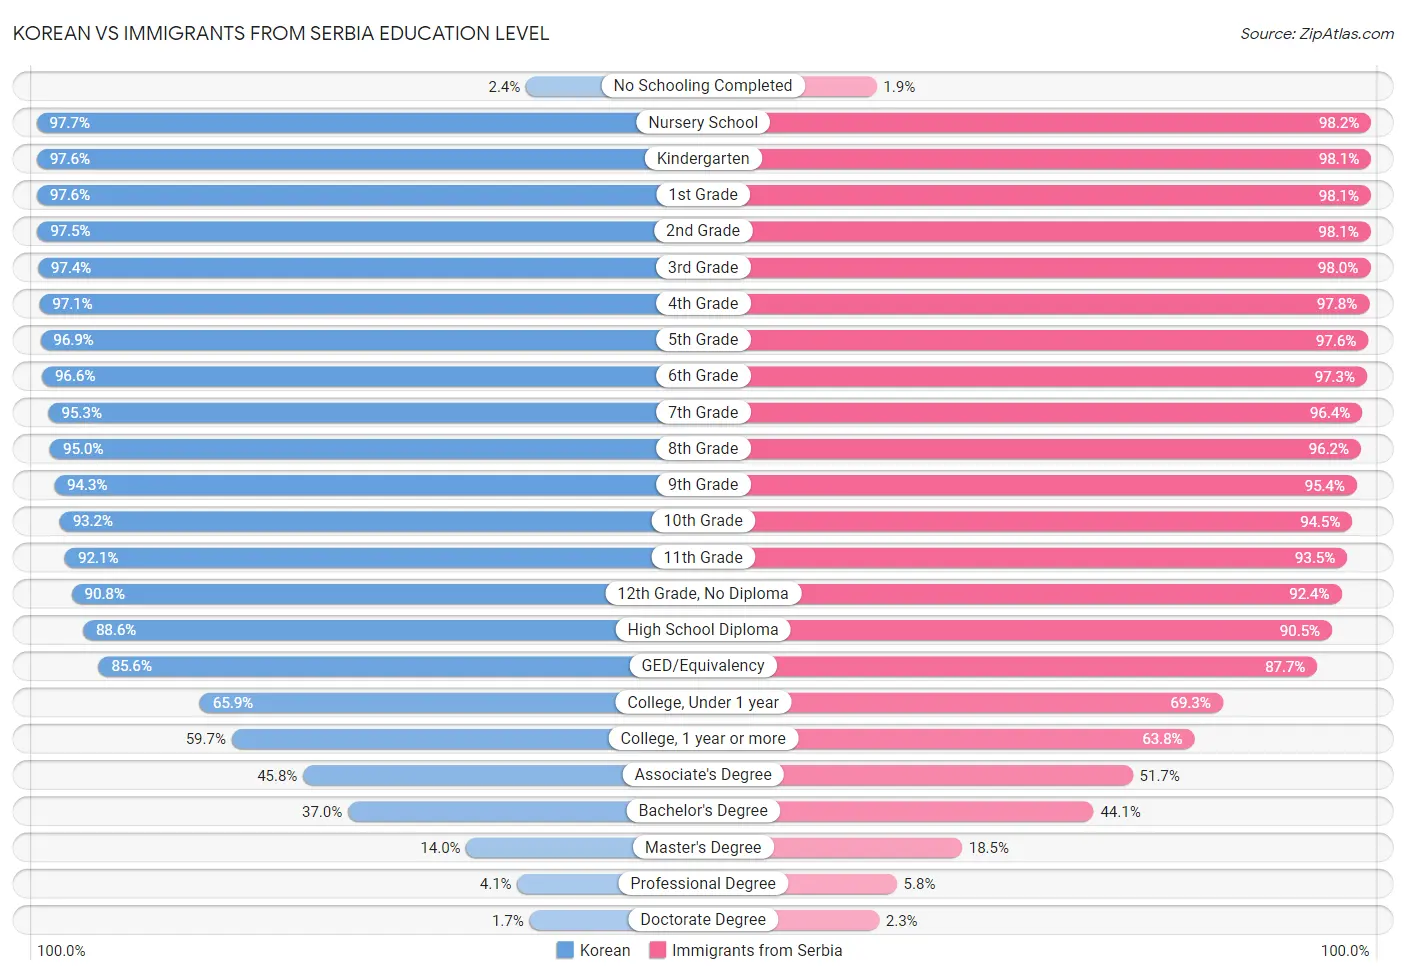 Korean vs Immigrants from Serbia Education Level